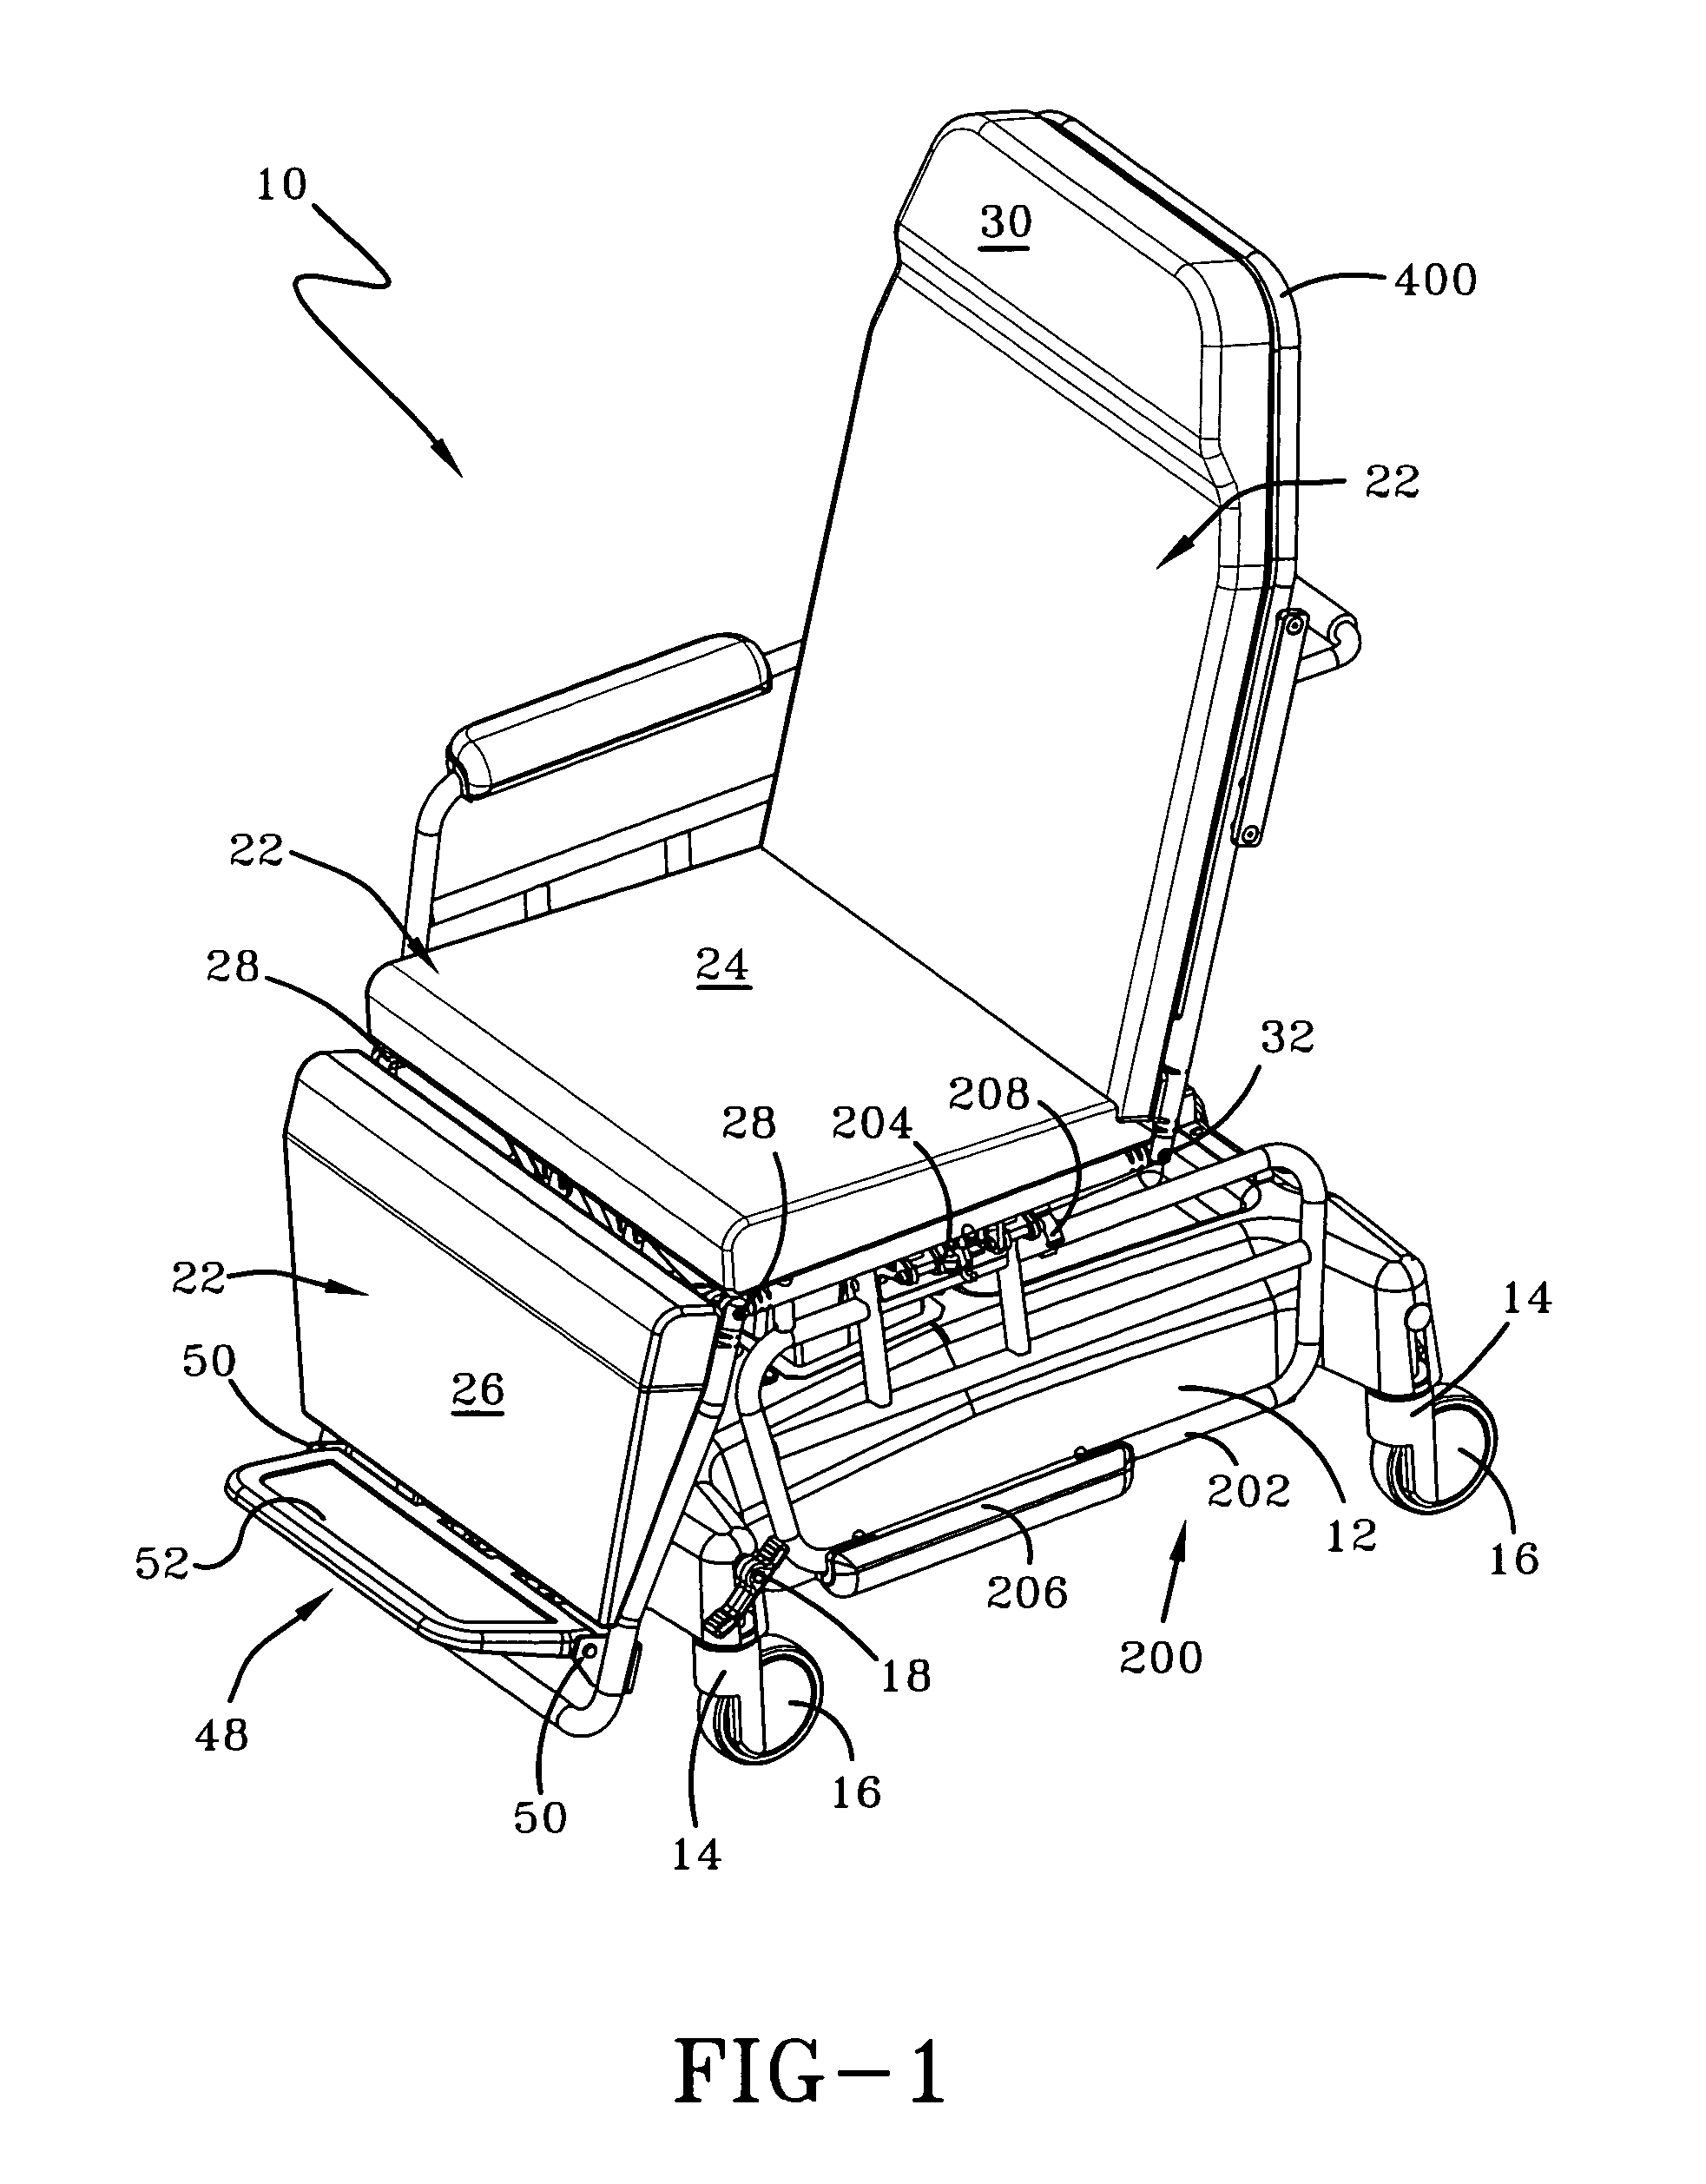 Multi-purpose patient chair